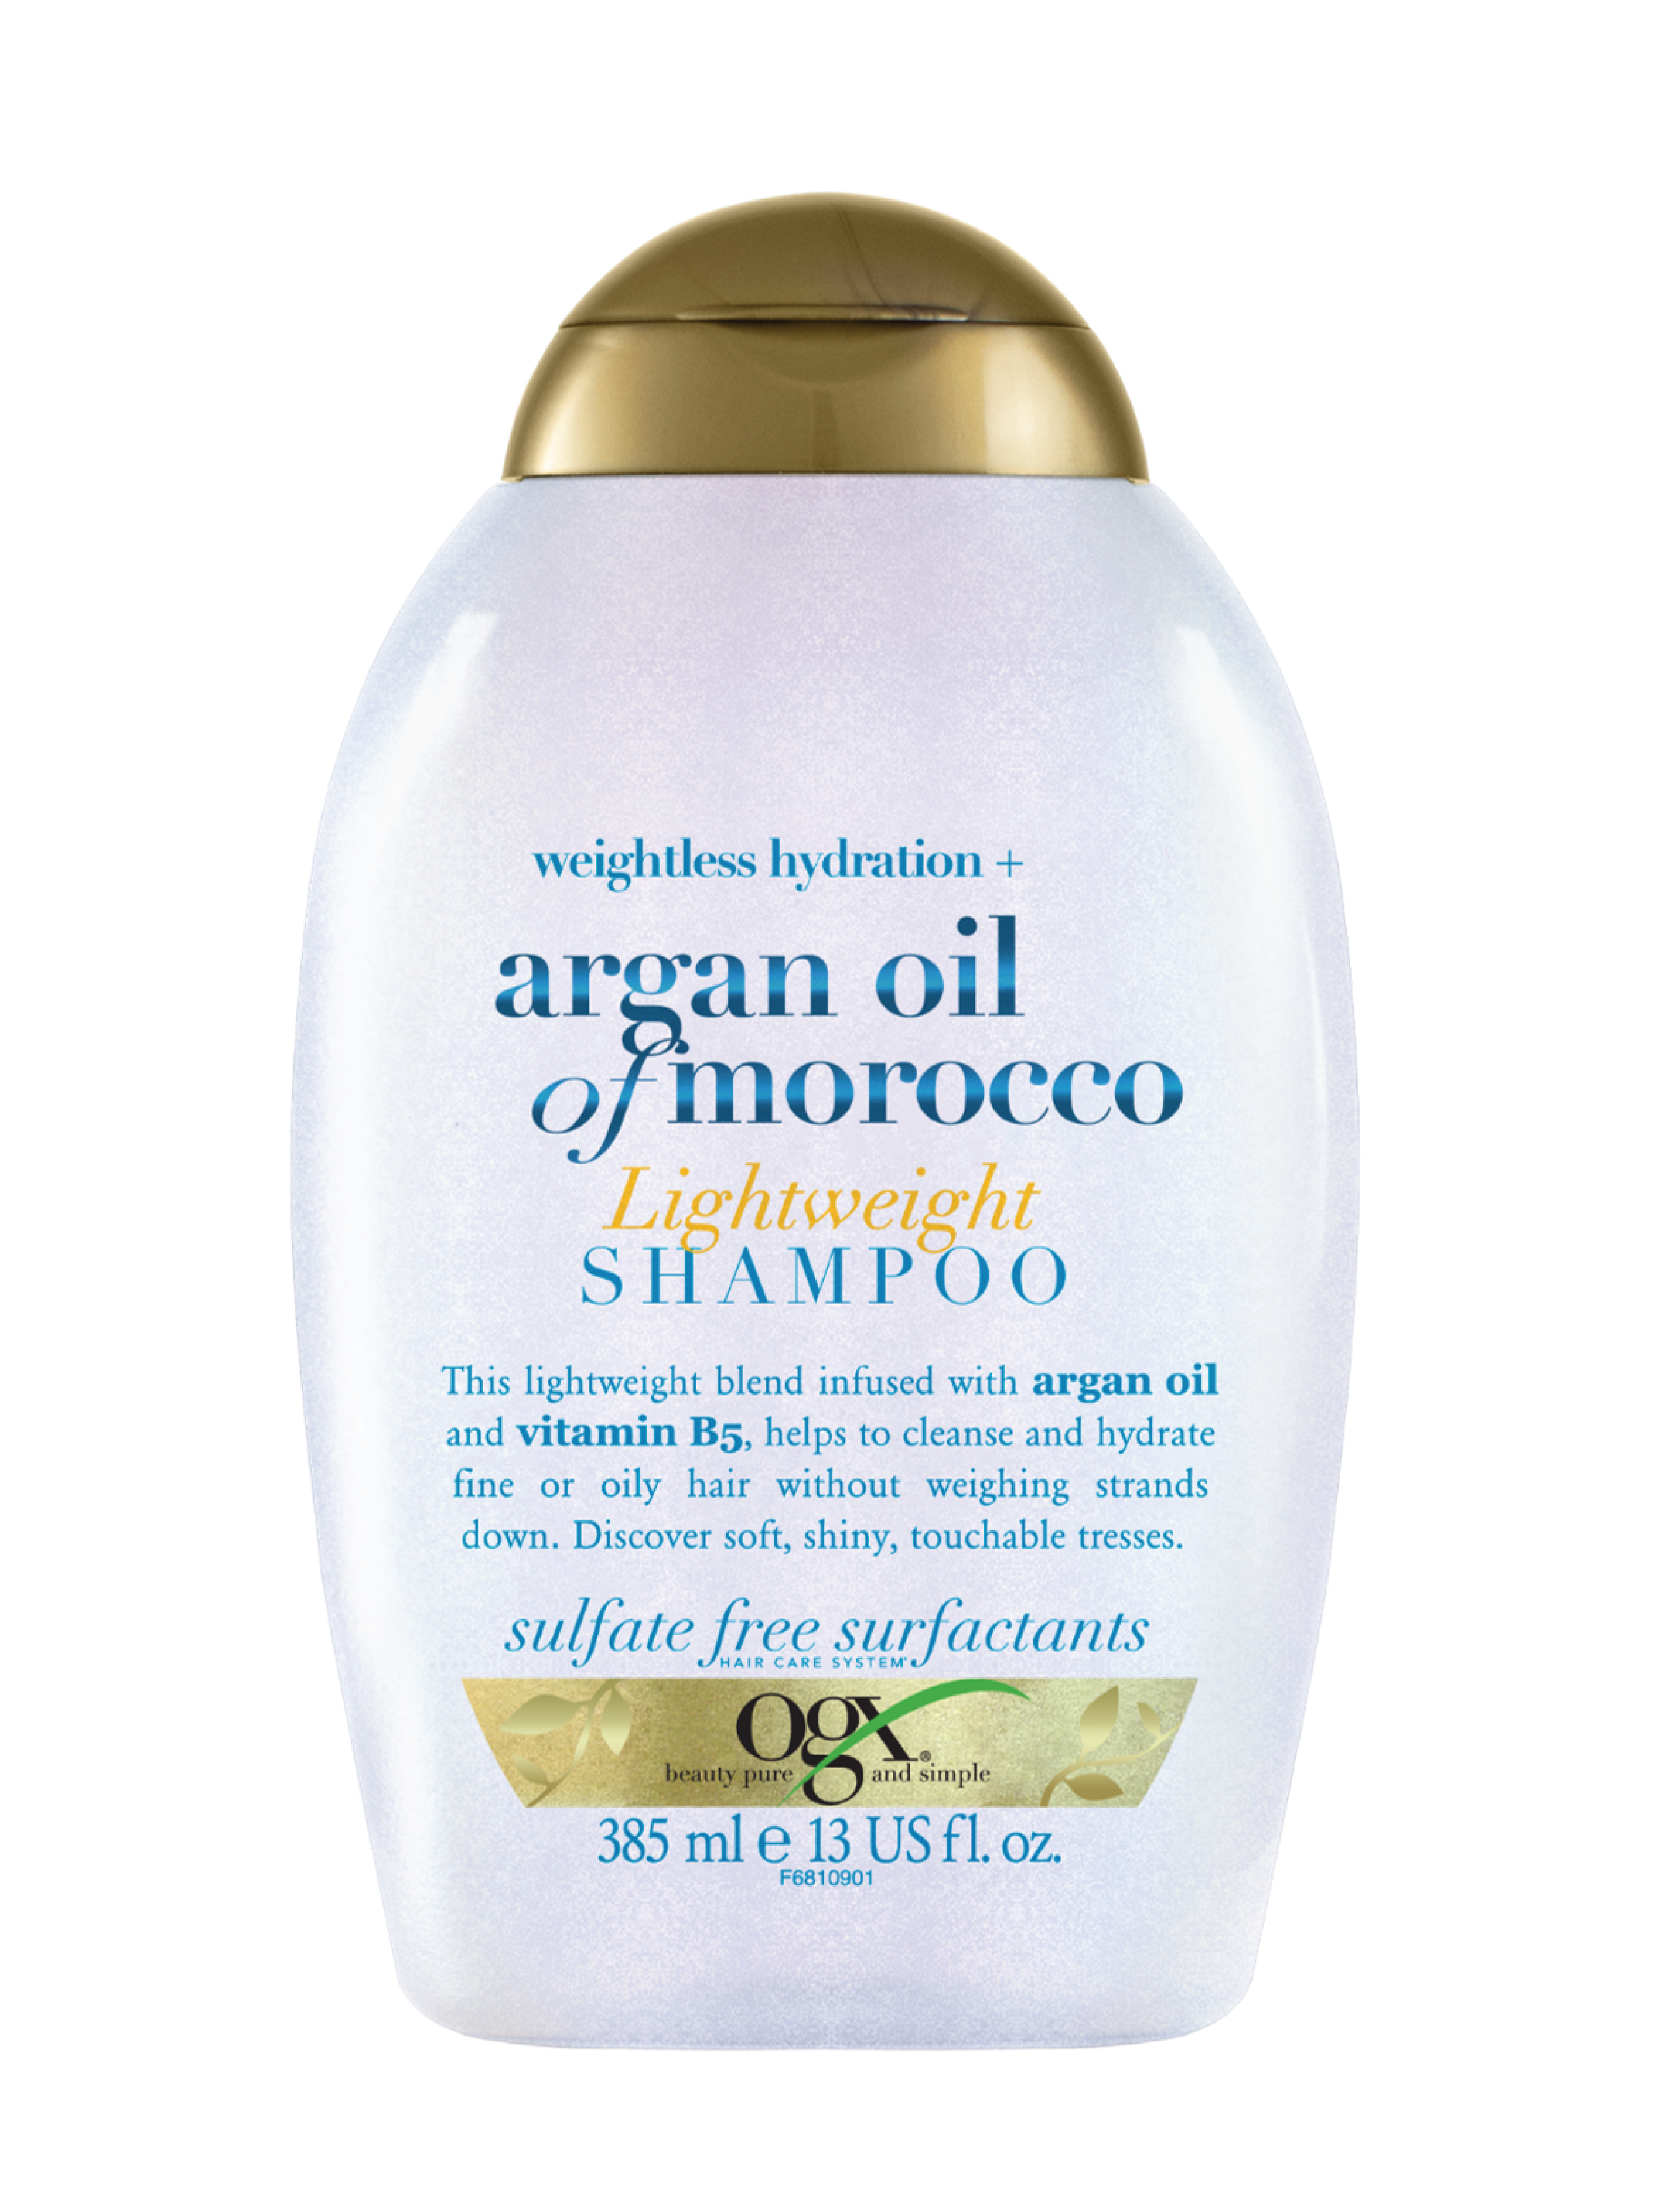 Ogx Moroccan Argan Oil Lightweight Shampoo, 385 ml